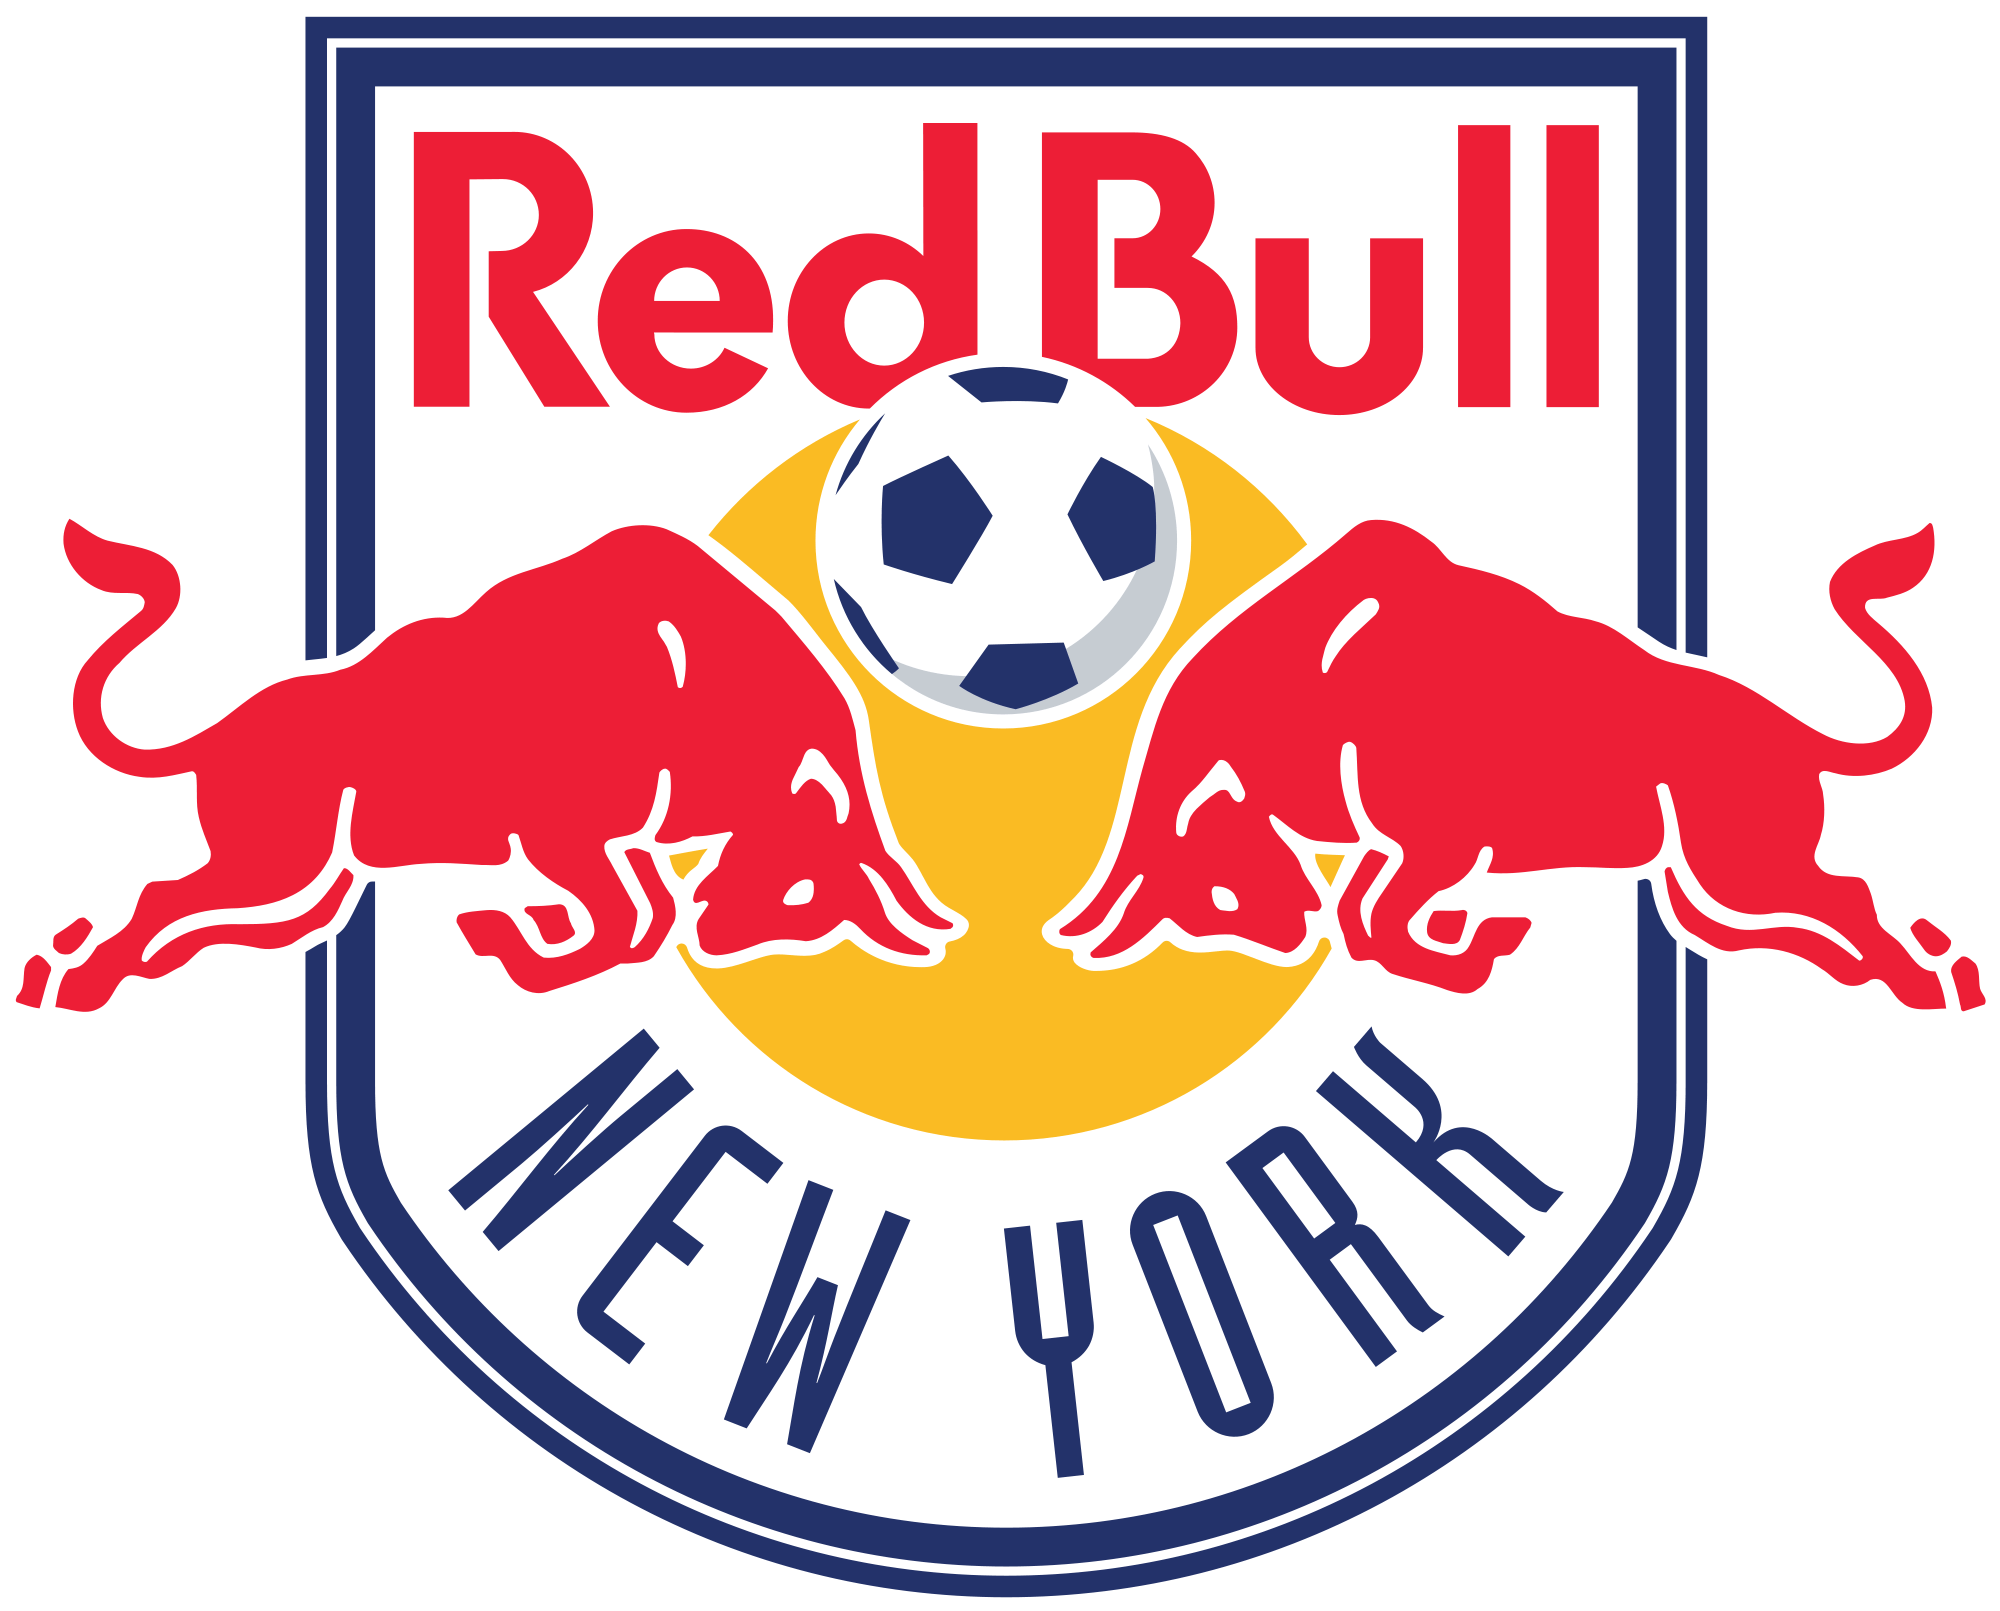 Red Bull Background And Wallpaper New York Red Bulls Logo